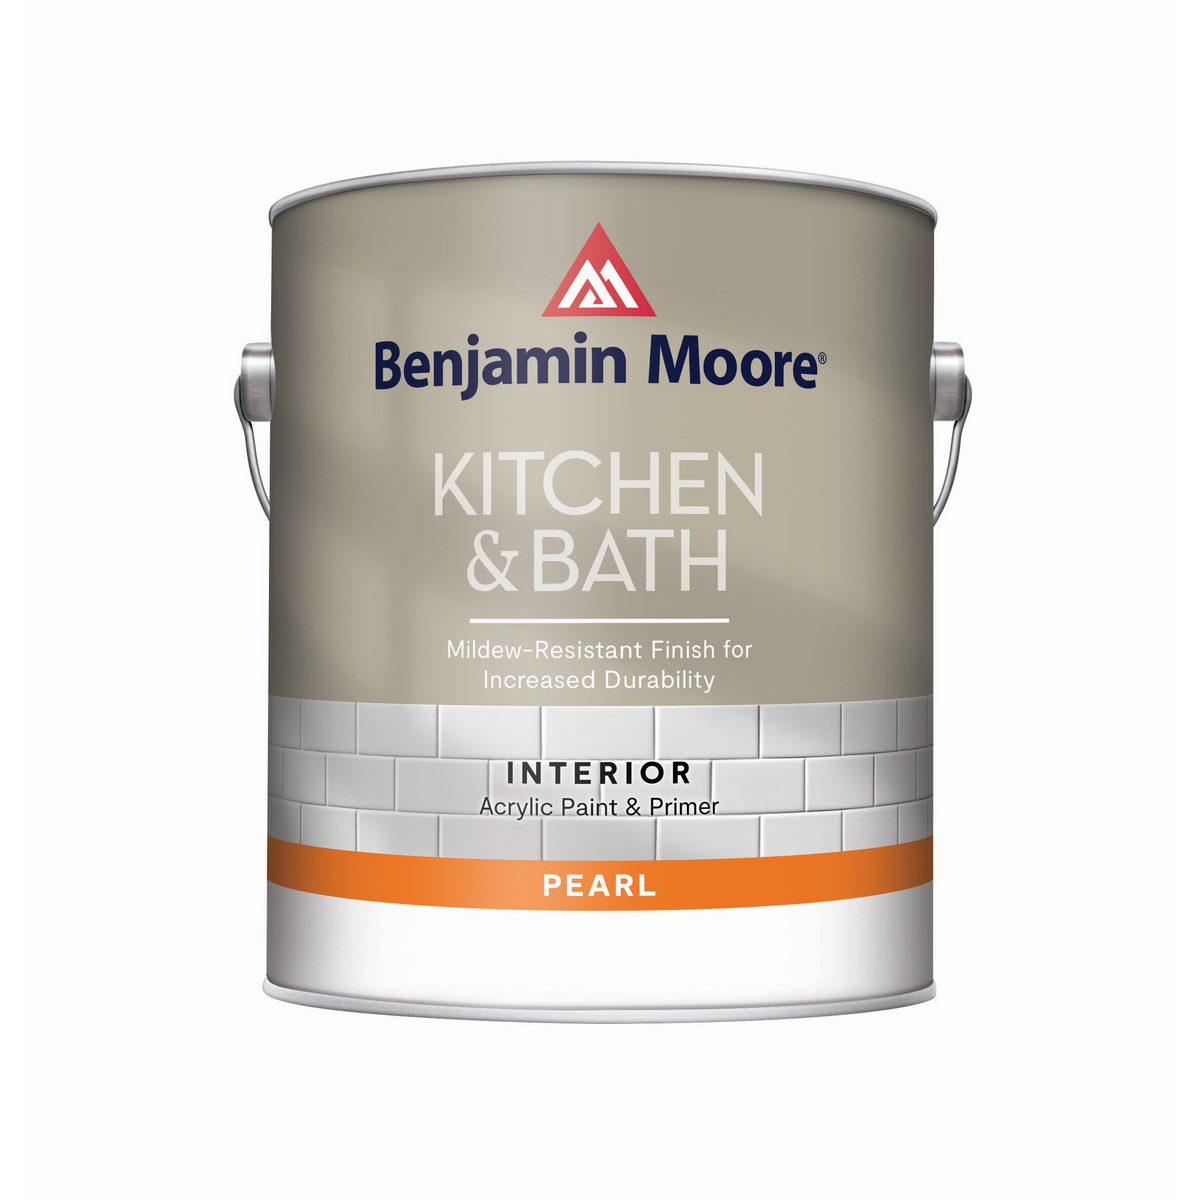 Benjamin Moore Kitchen & Bath Paint - The Paint People